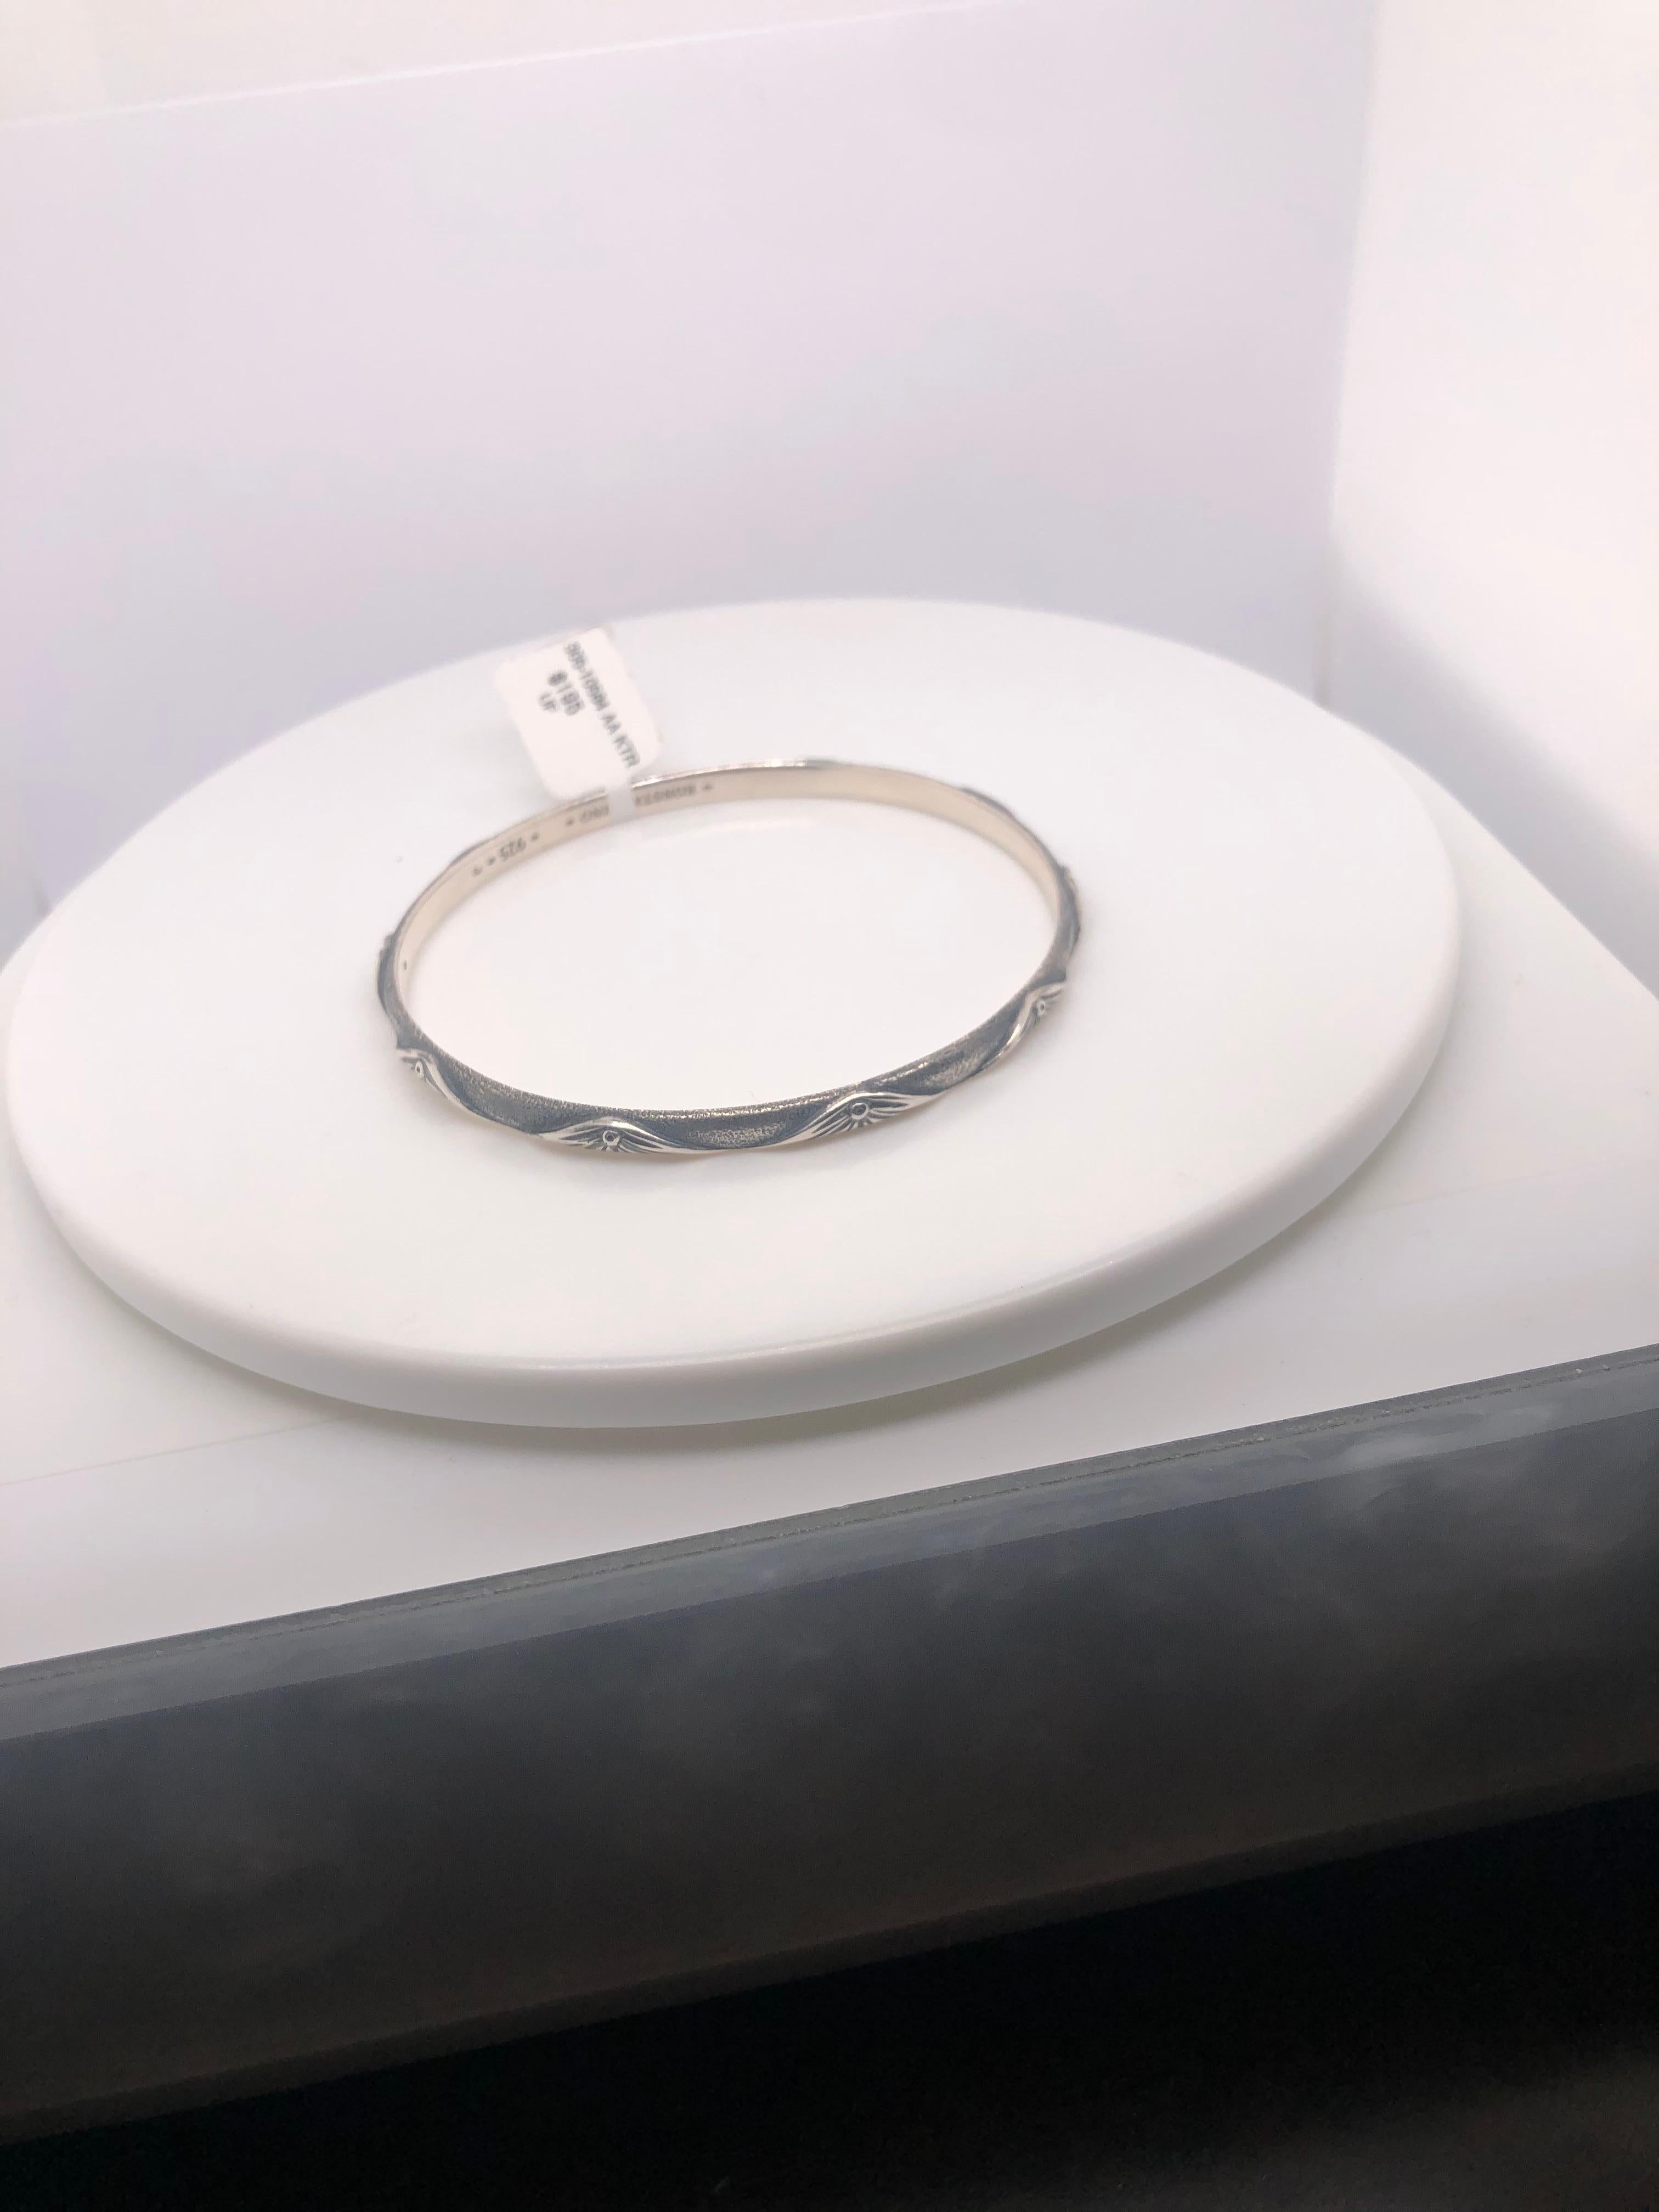 Konstantino Astria Bangle Bracelet in Sterling Silver  In New Condition For Sale In Dallas, TX